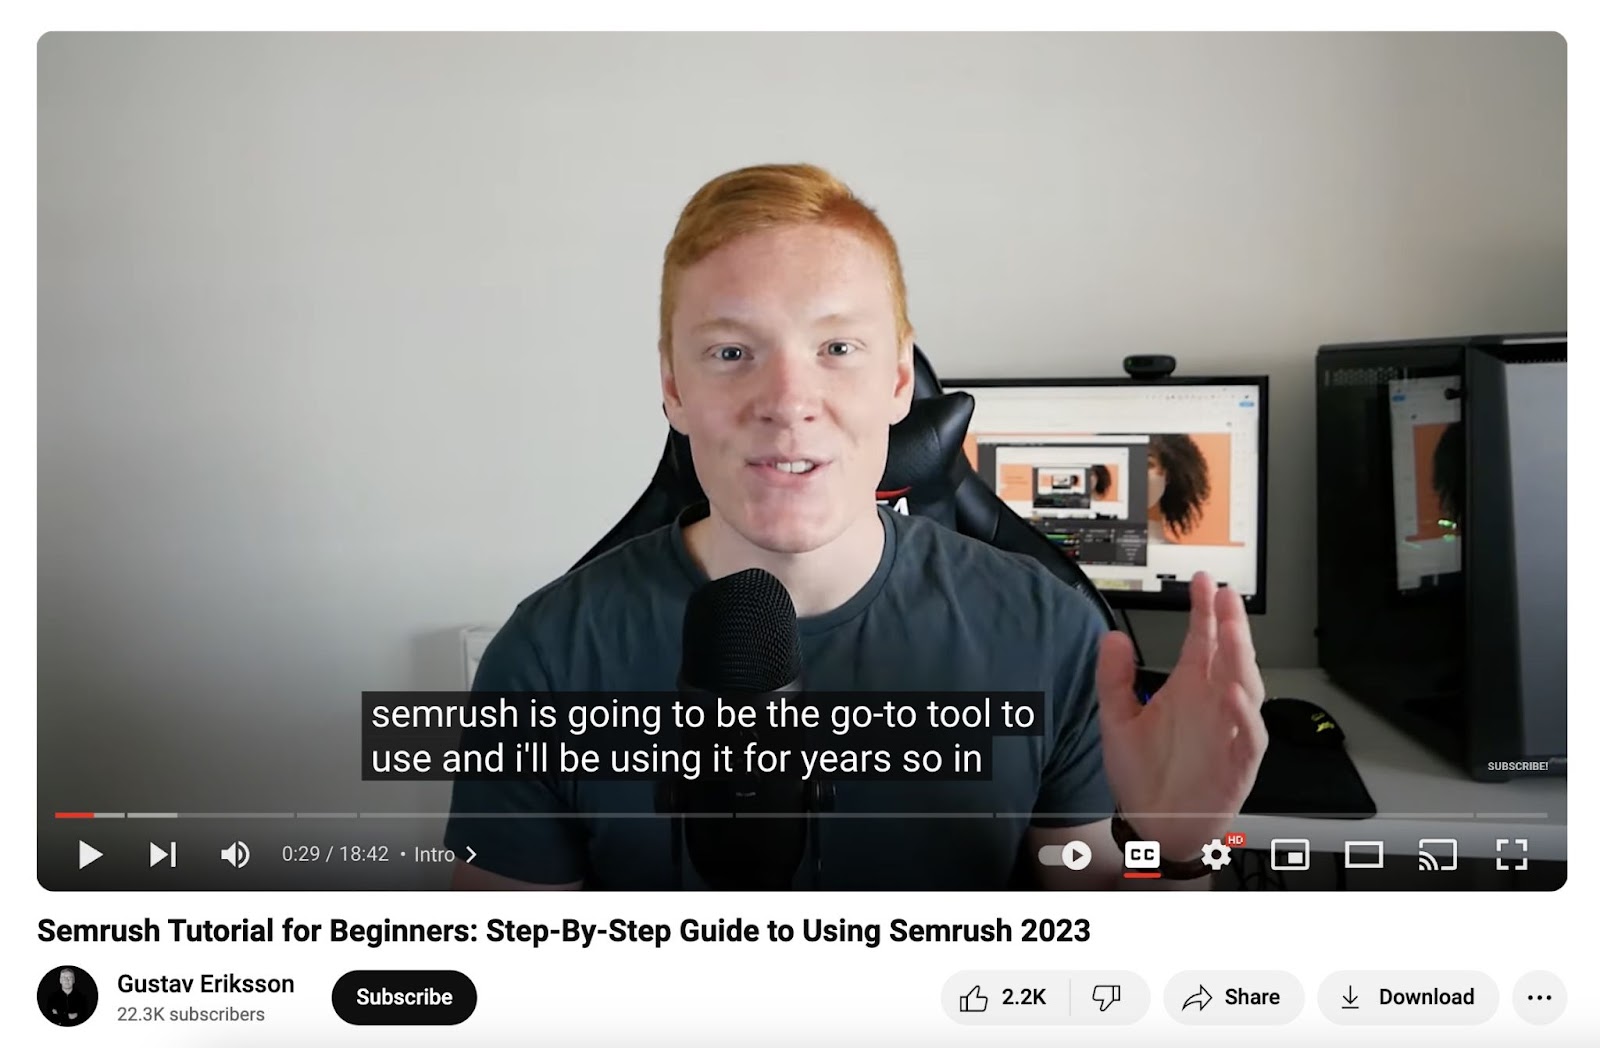 Semrush tutorial for beginners video connected  YouTube